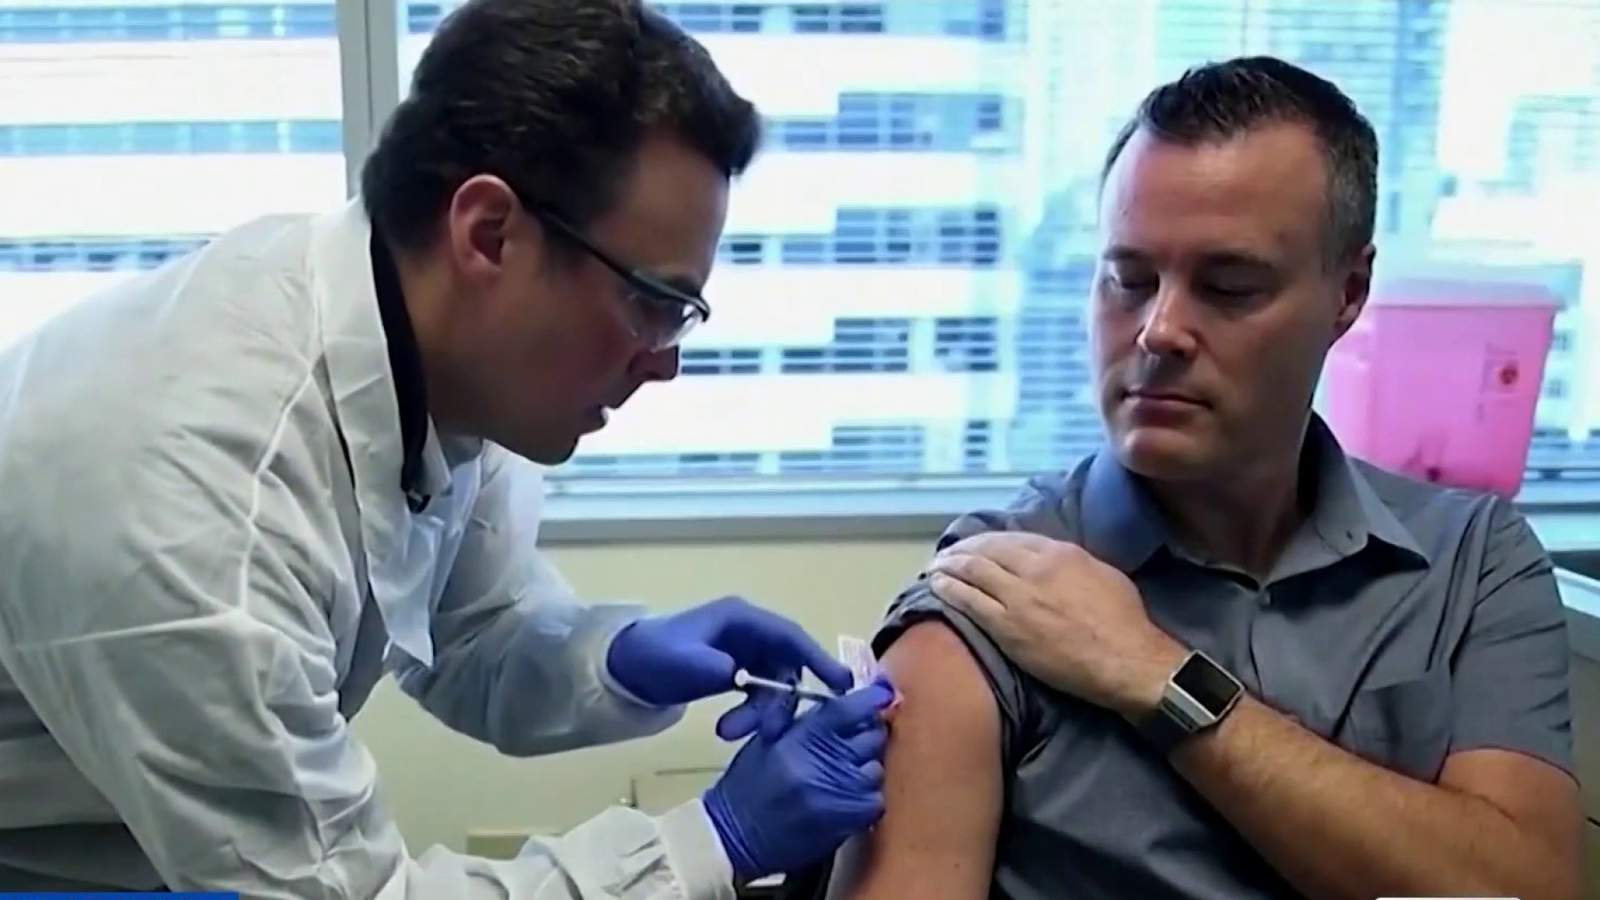 Florida adds 9,411 coronavirus cases as vaccines reach more hospitals